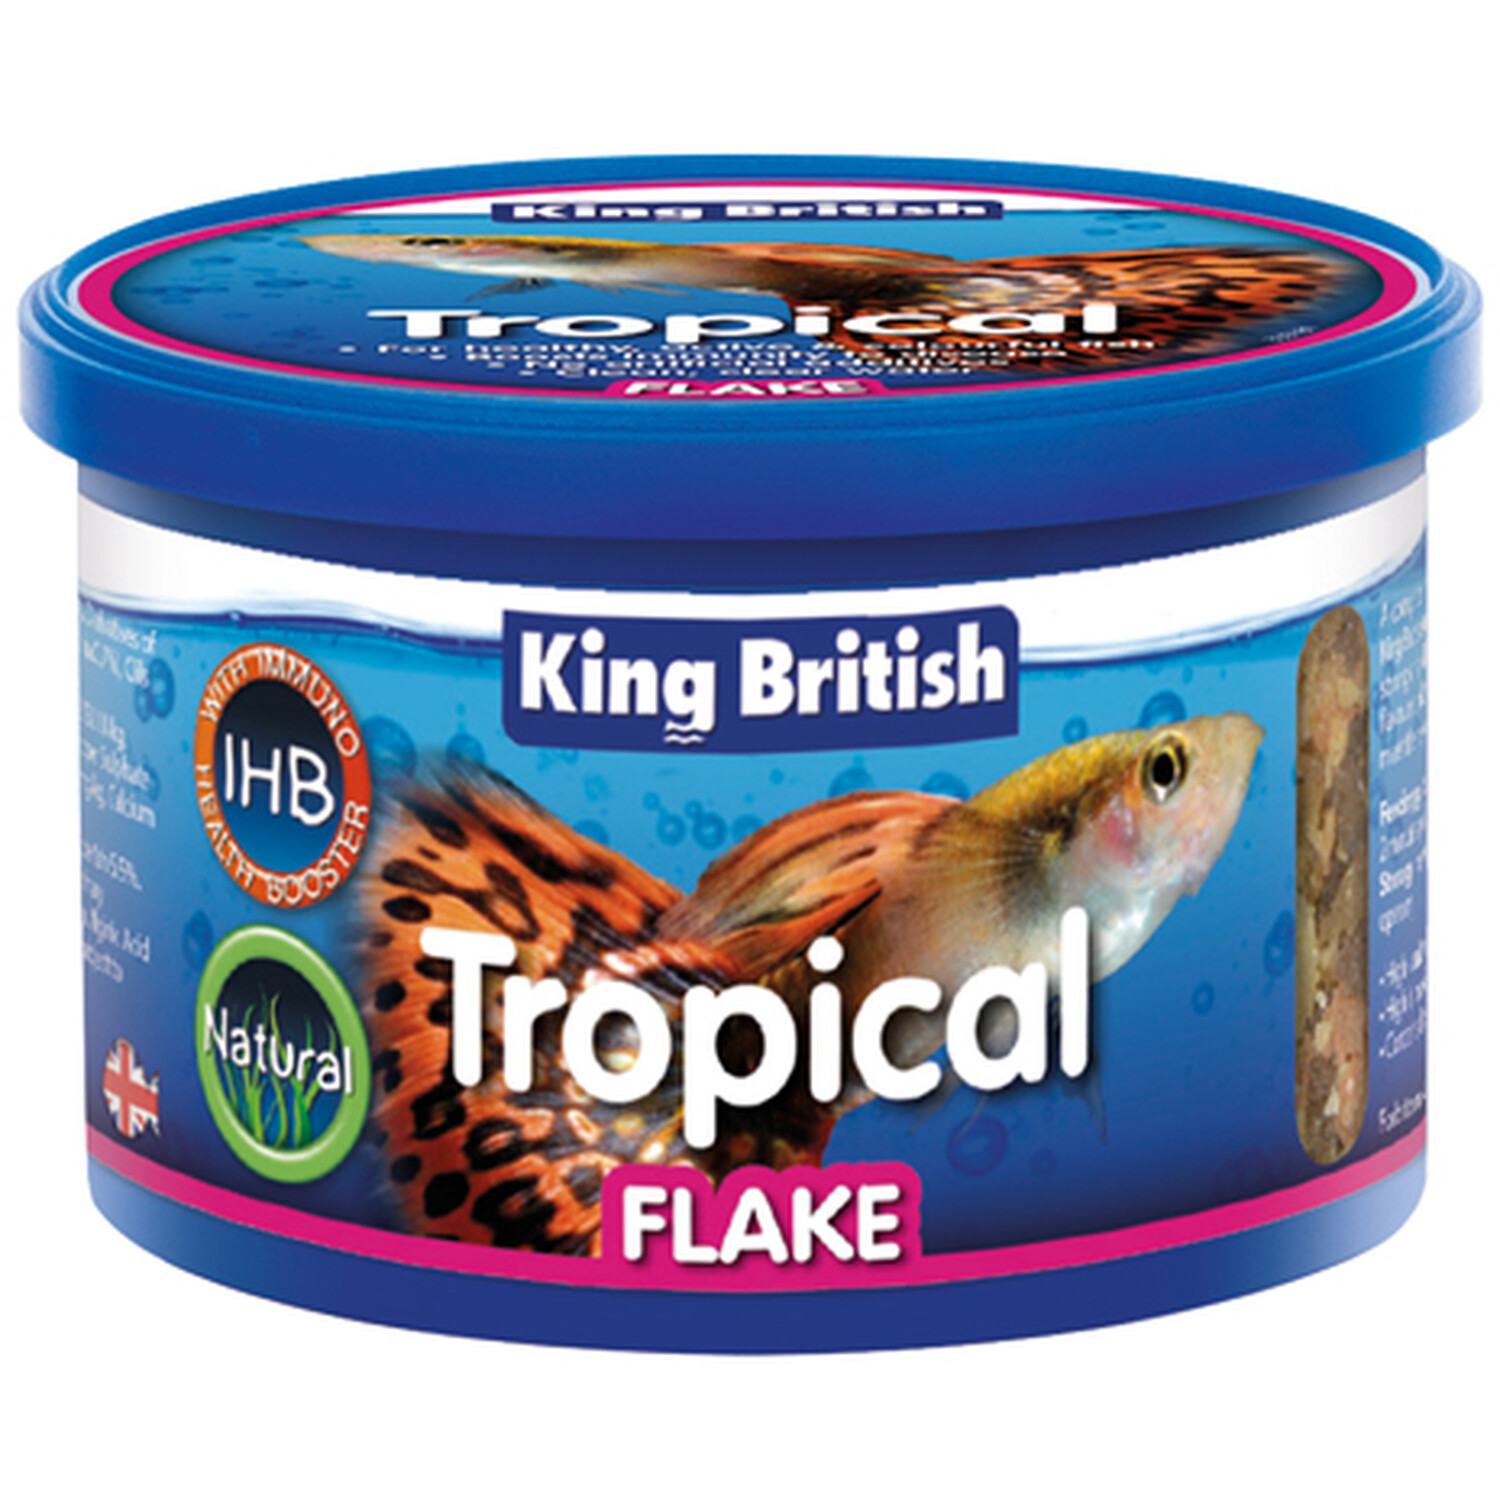 King British Tropical Flaked Food - 12g Image